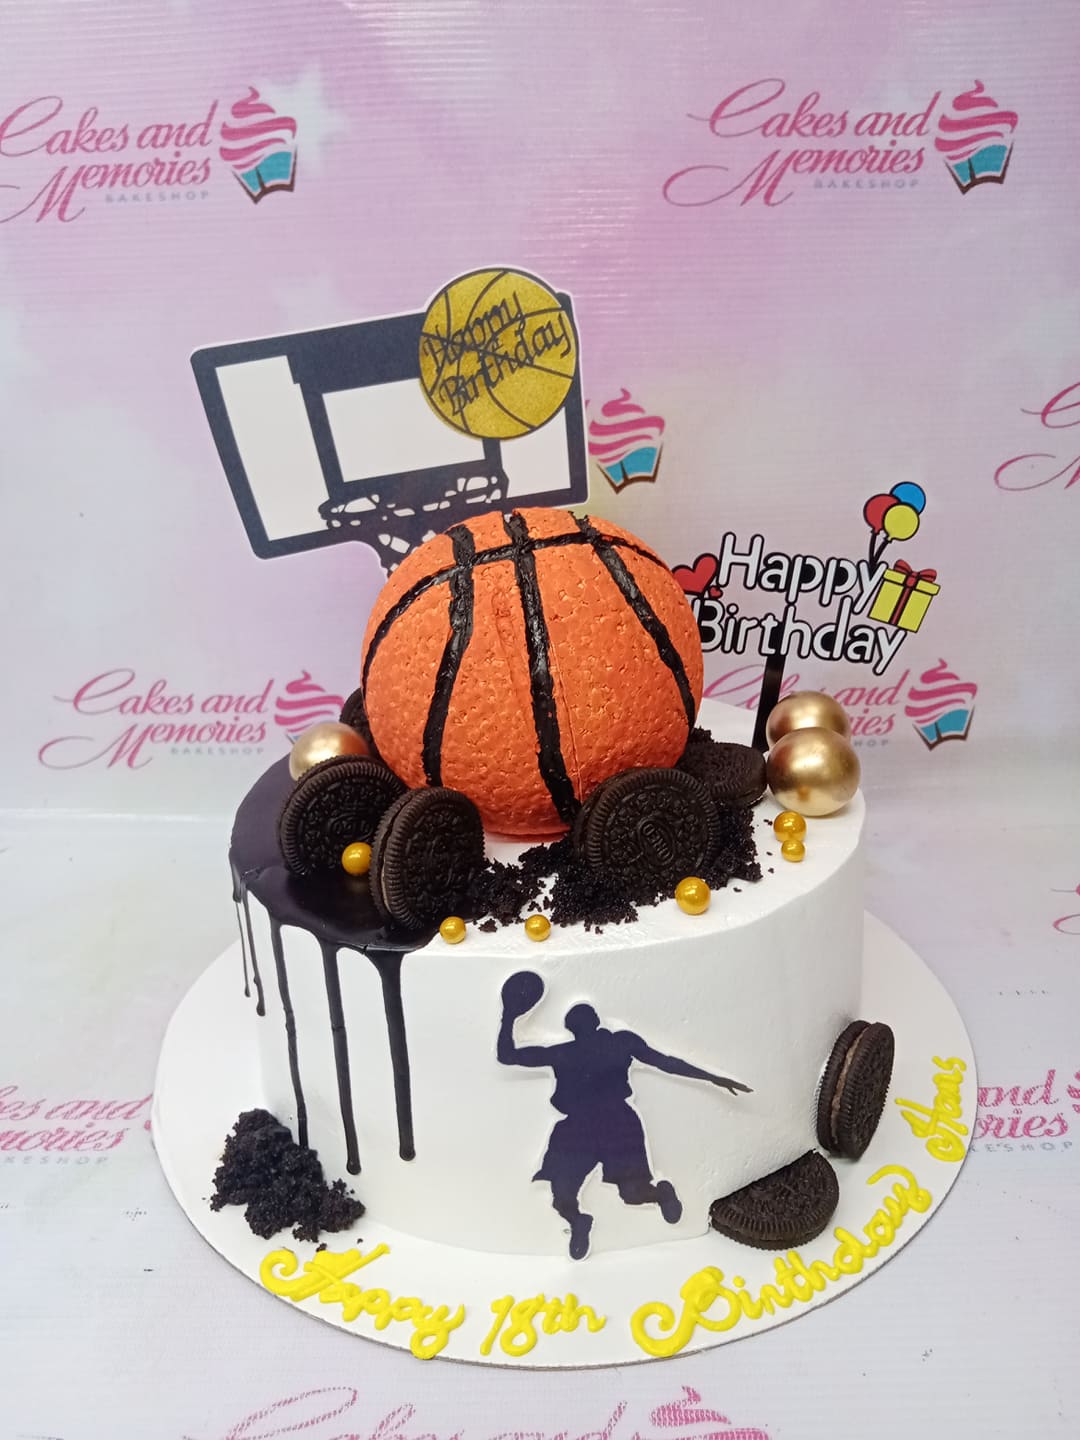 Basketball Players (Boys) Cake Decorating Instructions